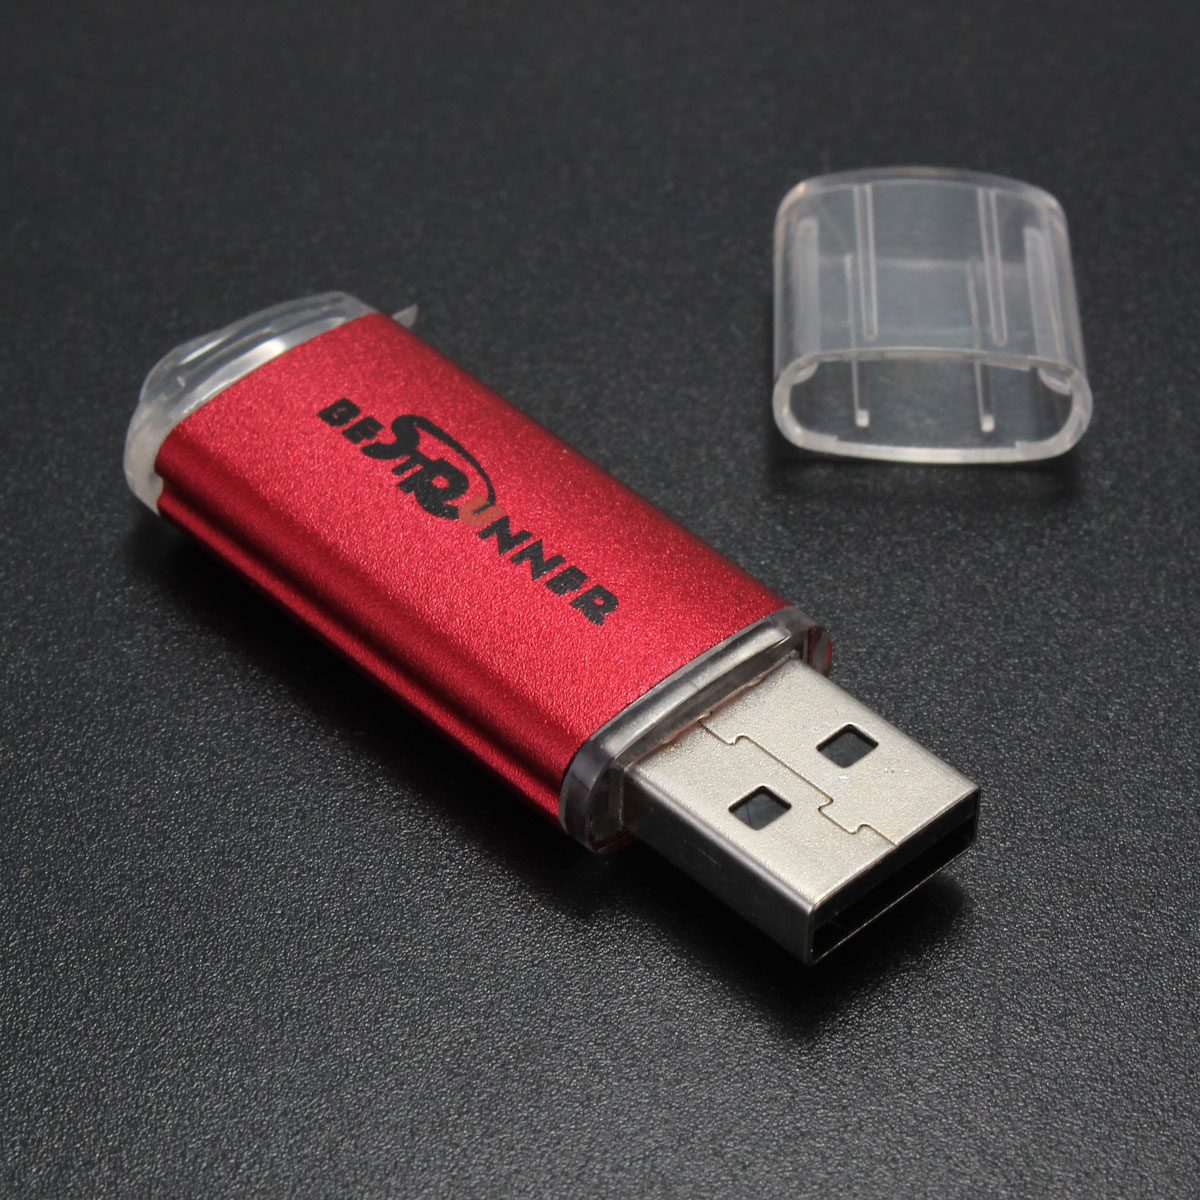 Bestrunner-Multi-Color-Portable-USB-20-1GB960M-Pendrive-USB-Disk-for-Macbook-Laptop-PC-1723018-12